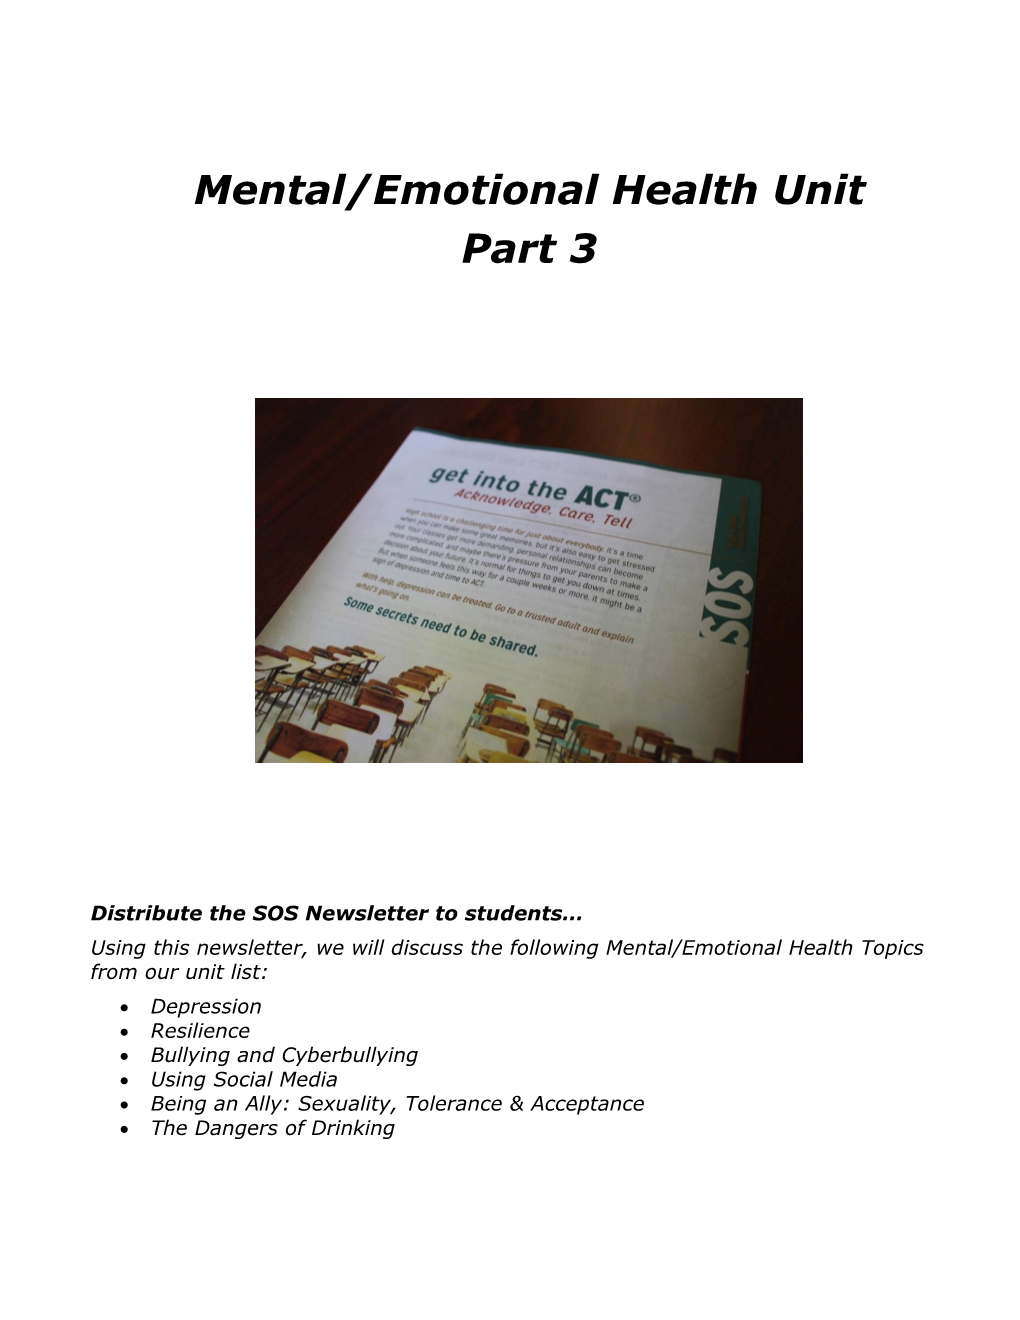 Mental/Emotional Health Unit Part 3